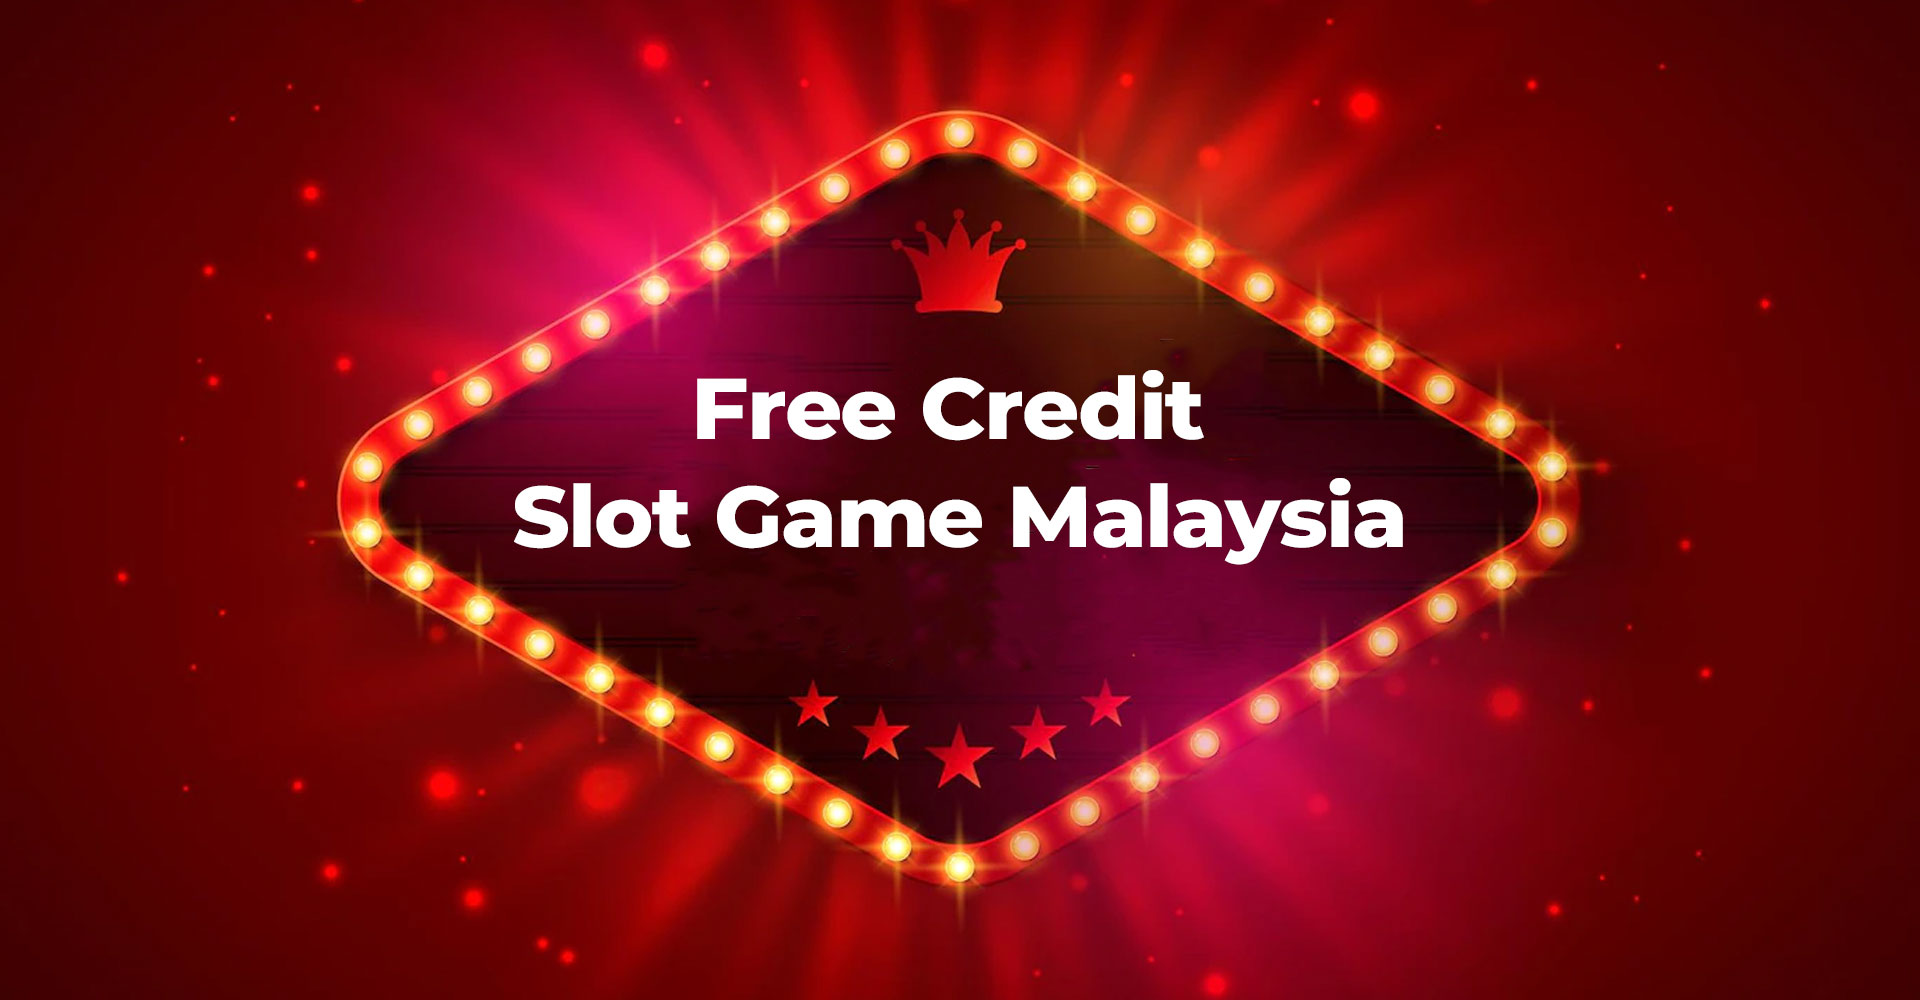 Free Credit Slot Game Malaysia